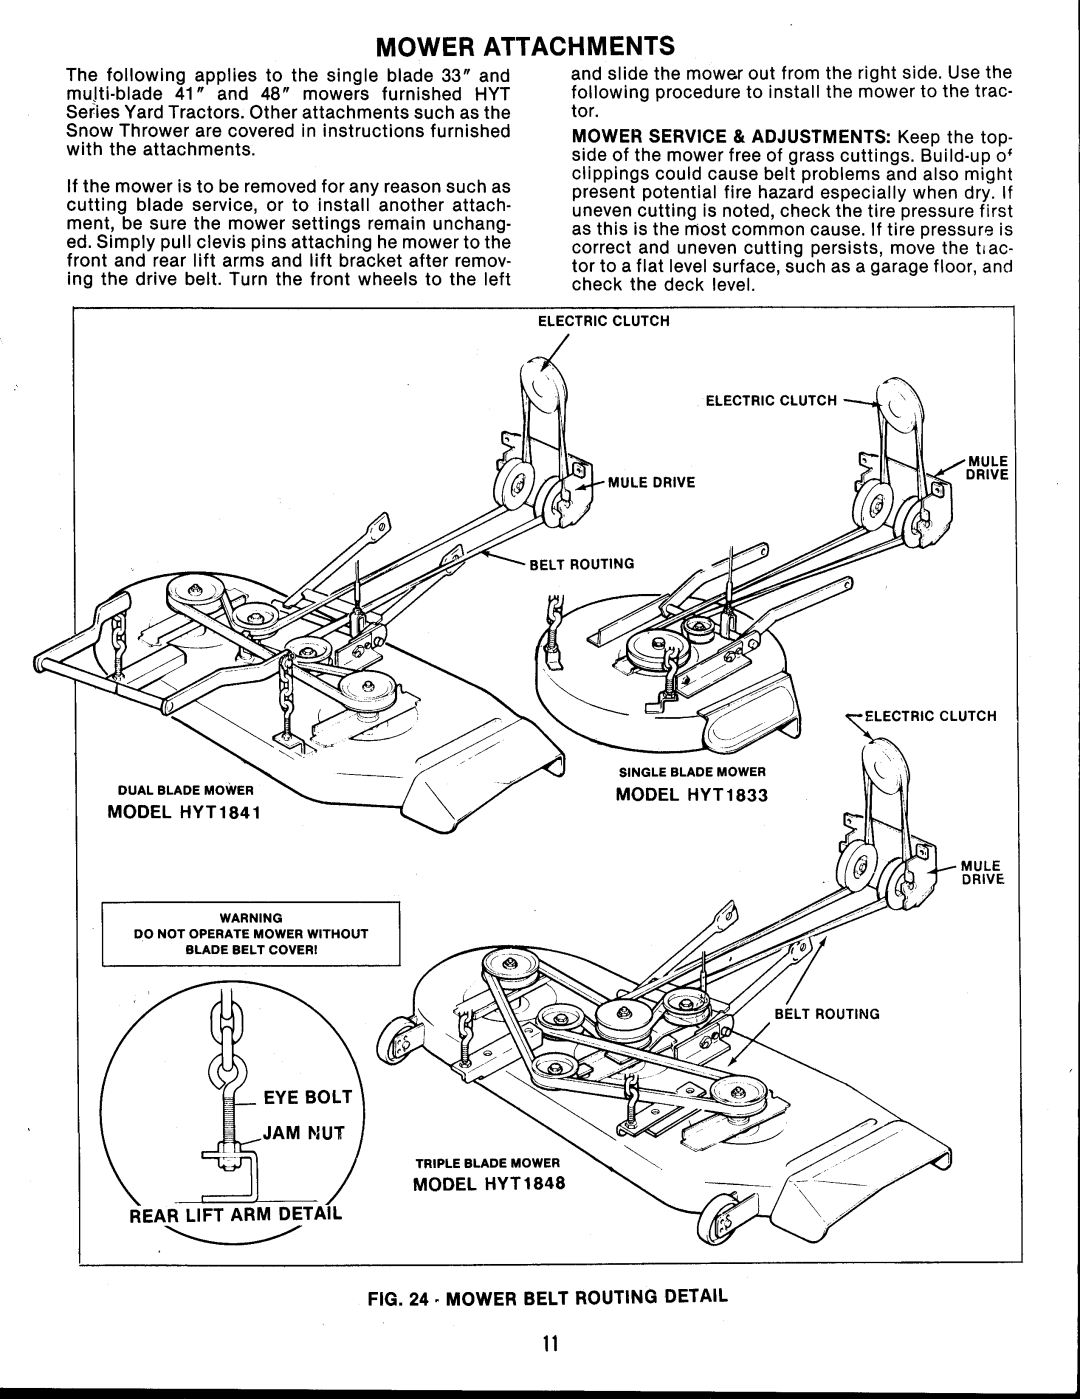 Snapper HYT18 Series manual 